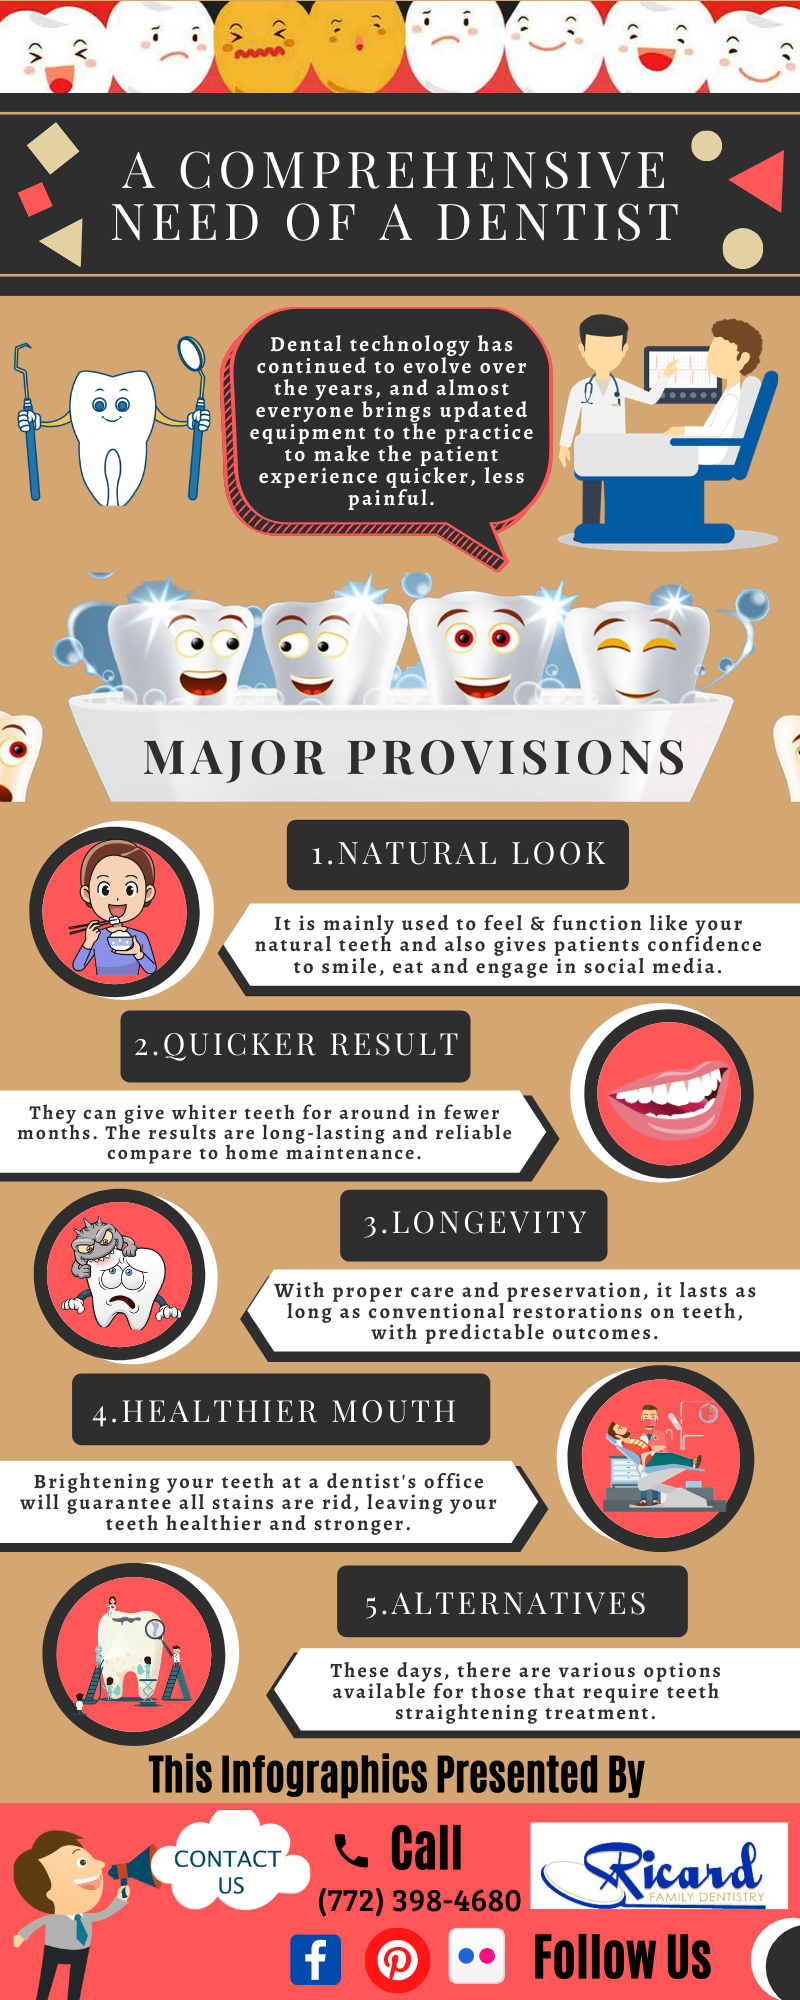 Transform the Aesthetics of Your Teeth